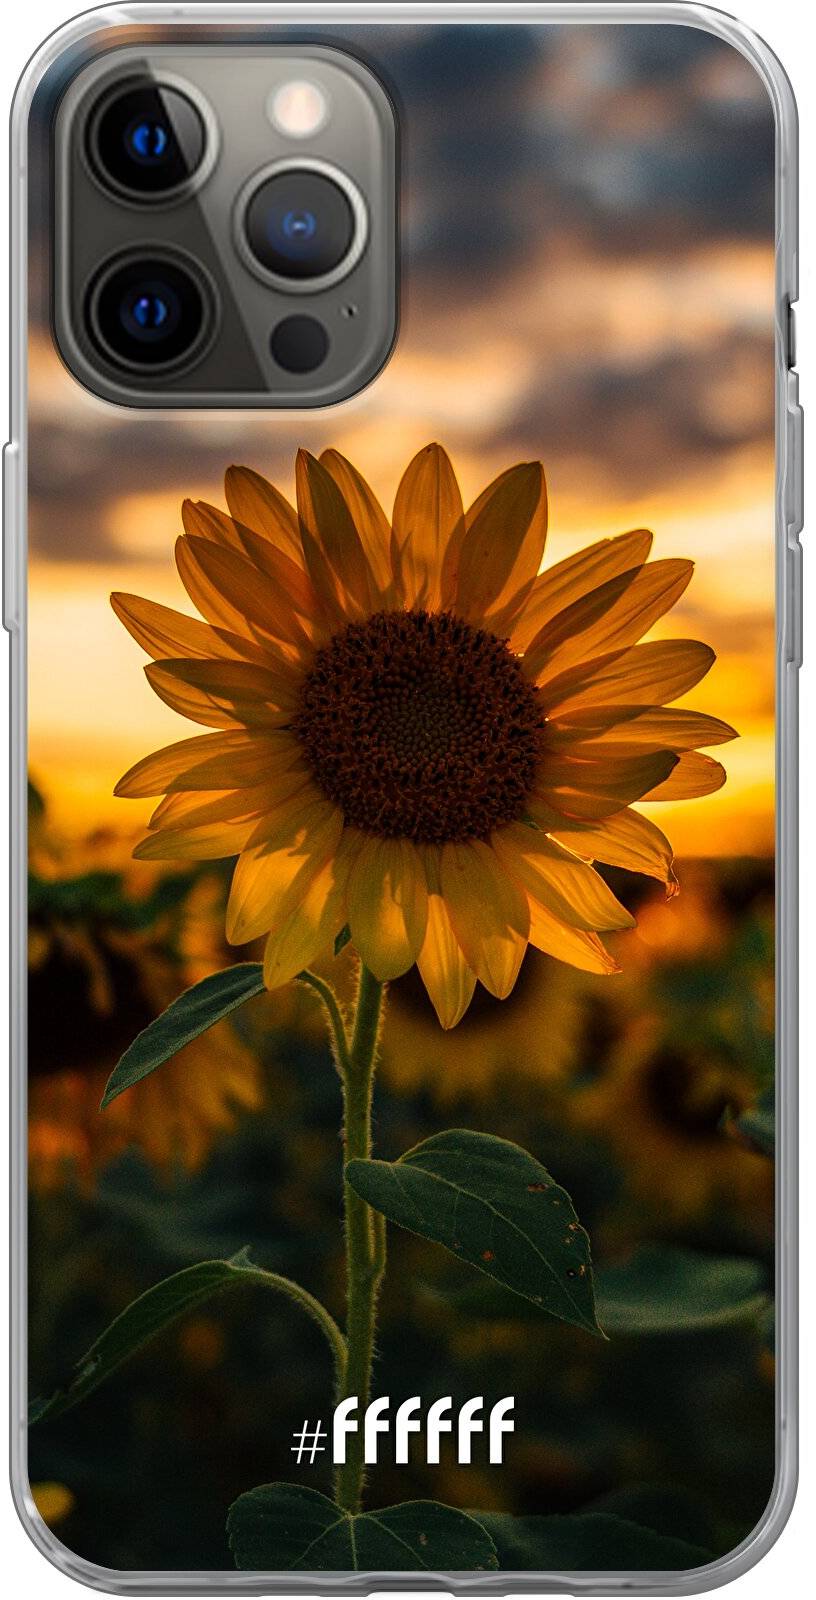 Sunset Sunflower iPhone 12 Pro Max